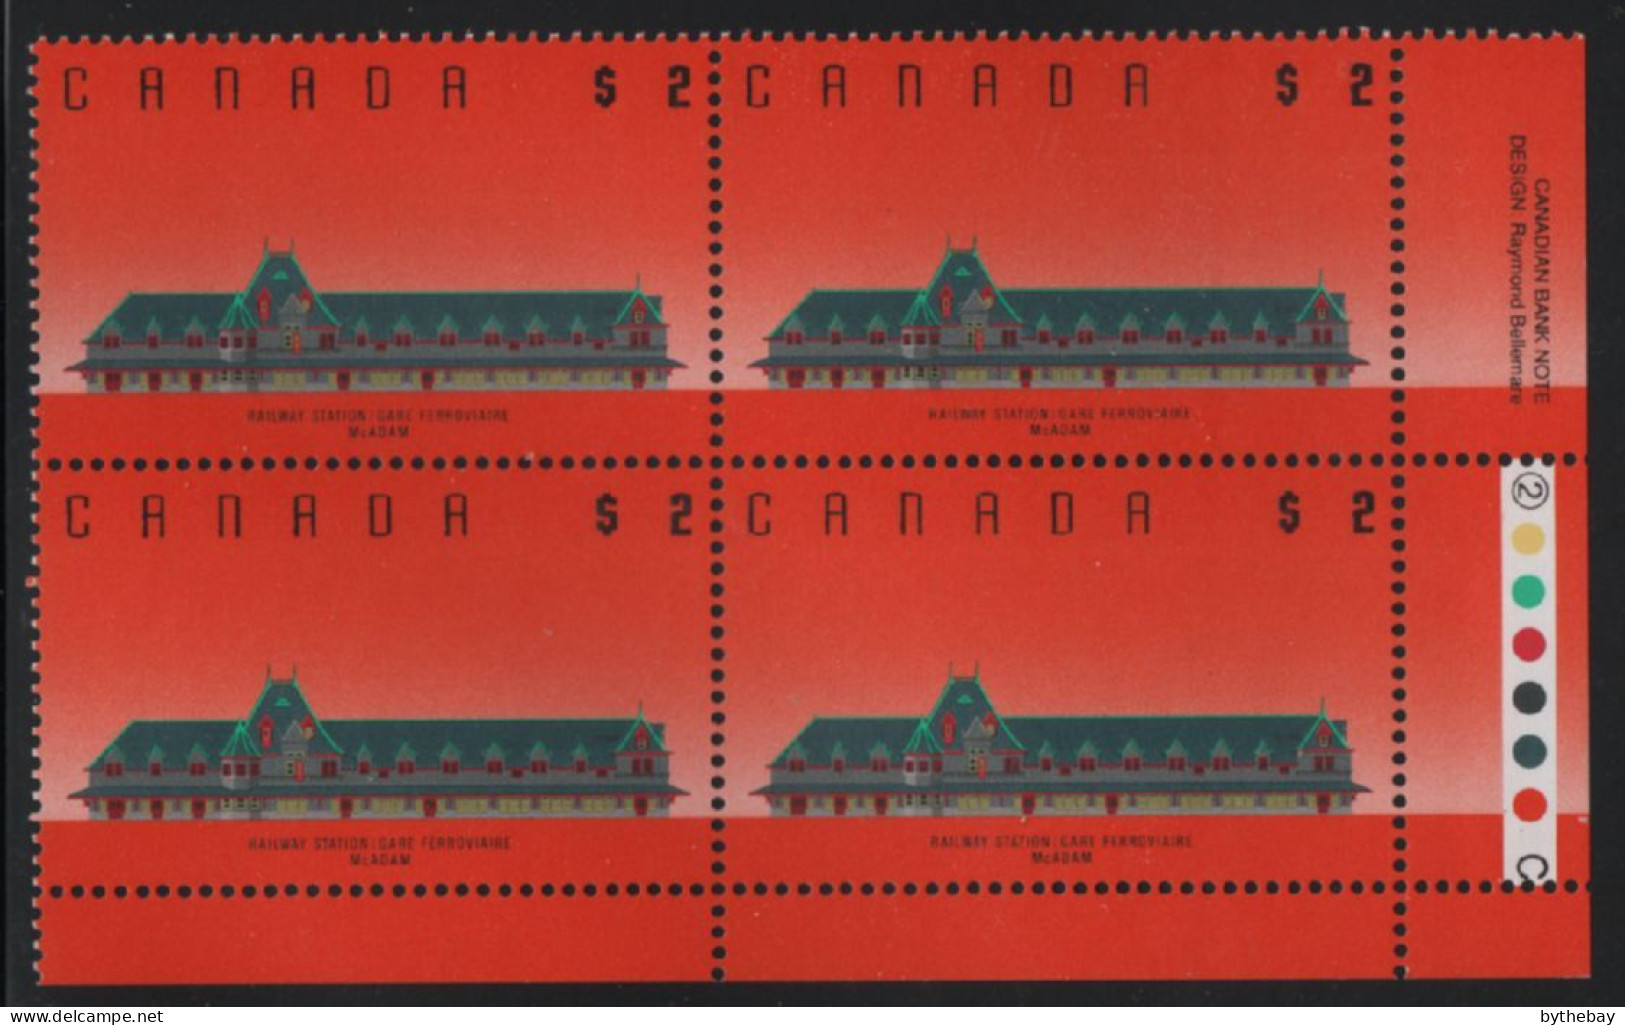 Canada 1988-92 MNH Sc 1182iii $2 McAdam Railway Station LR Plate Block - Plate Number & Inscriptions